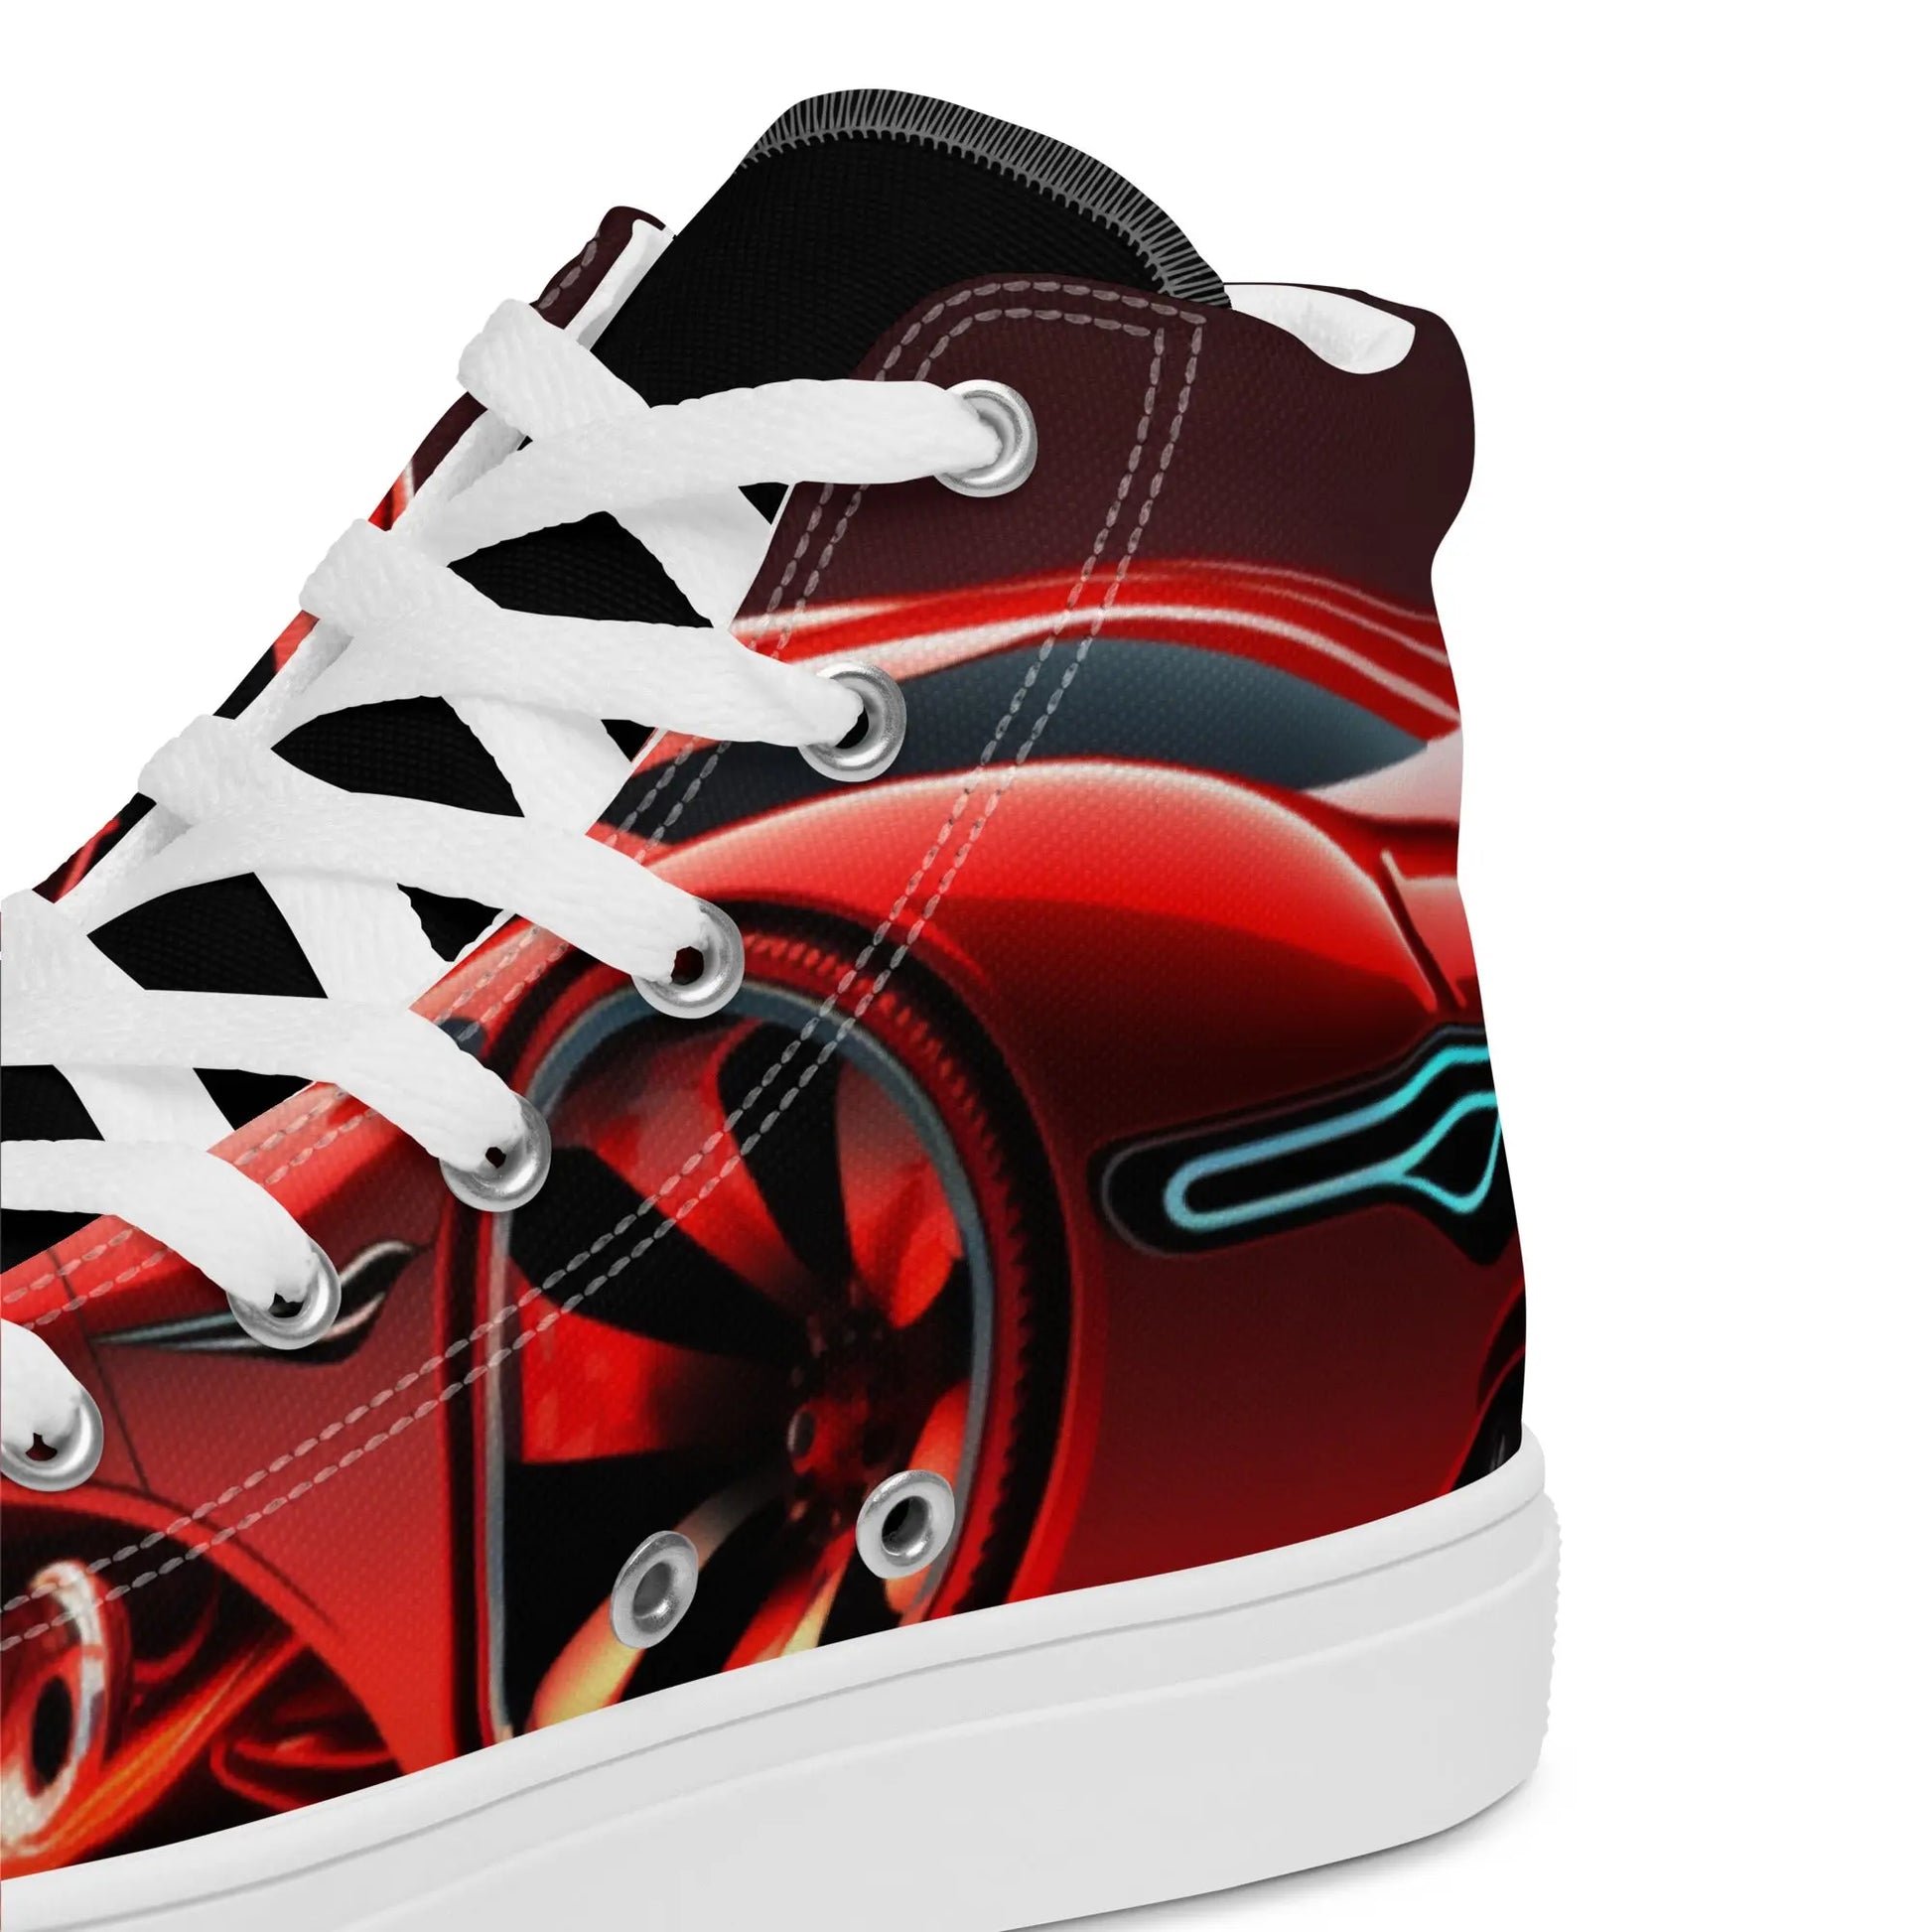 Glow in the Dark Speed High Top Sneakers: AI-Engineered, Unisex, Neon Red Car-Inspired, Durable, Comfortable Footwear for Nighttime Explorers Kinetic Footwear